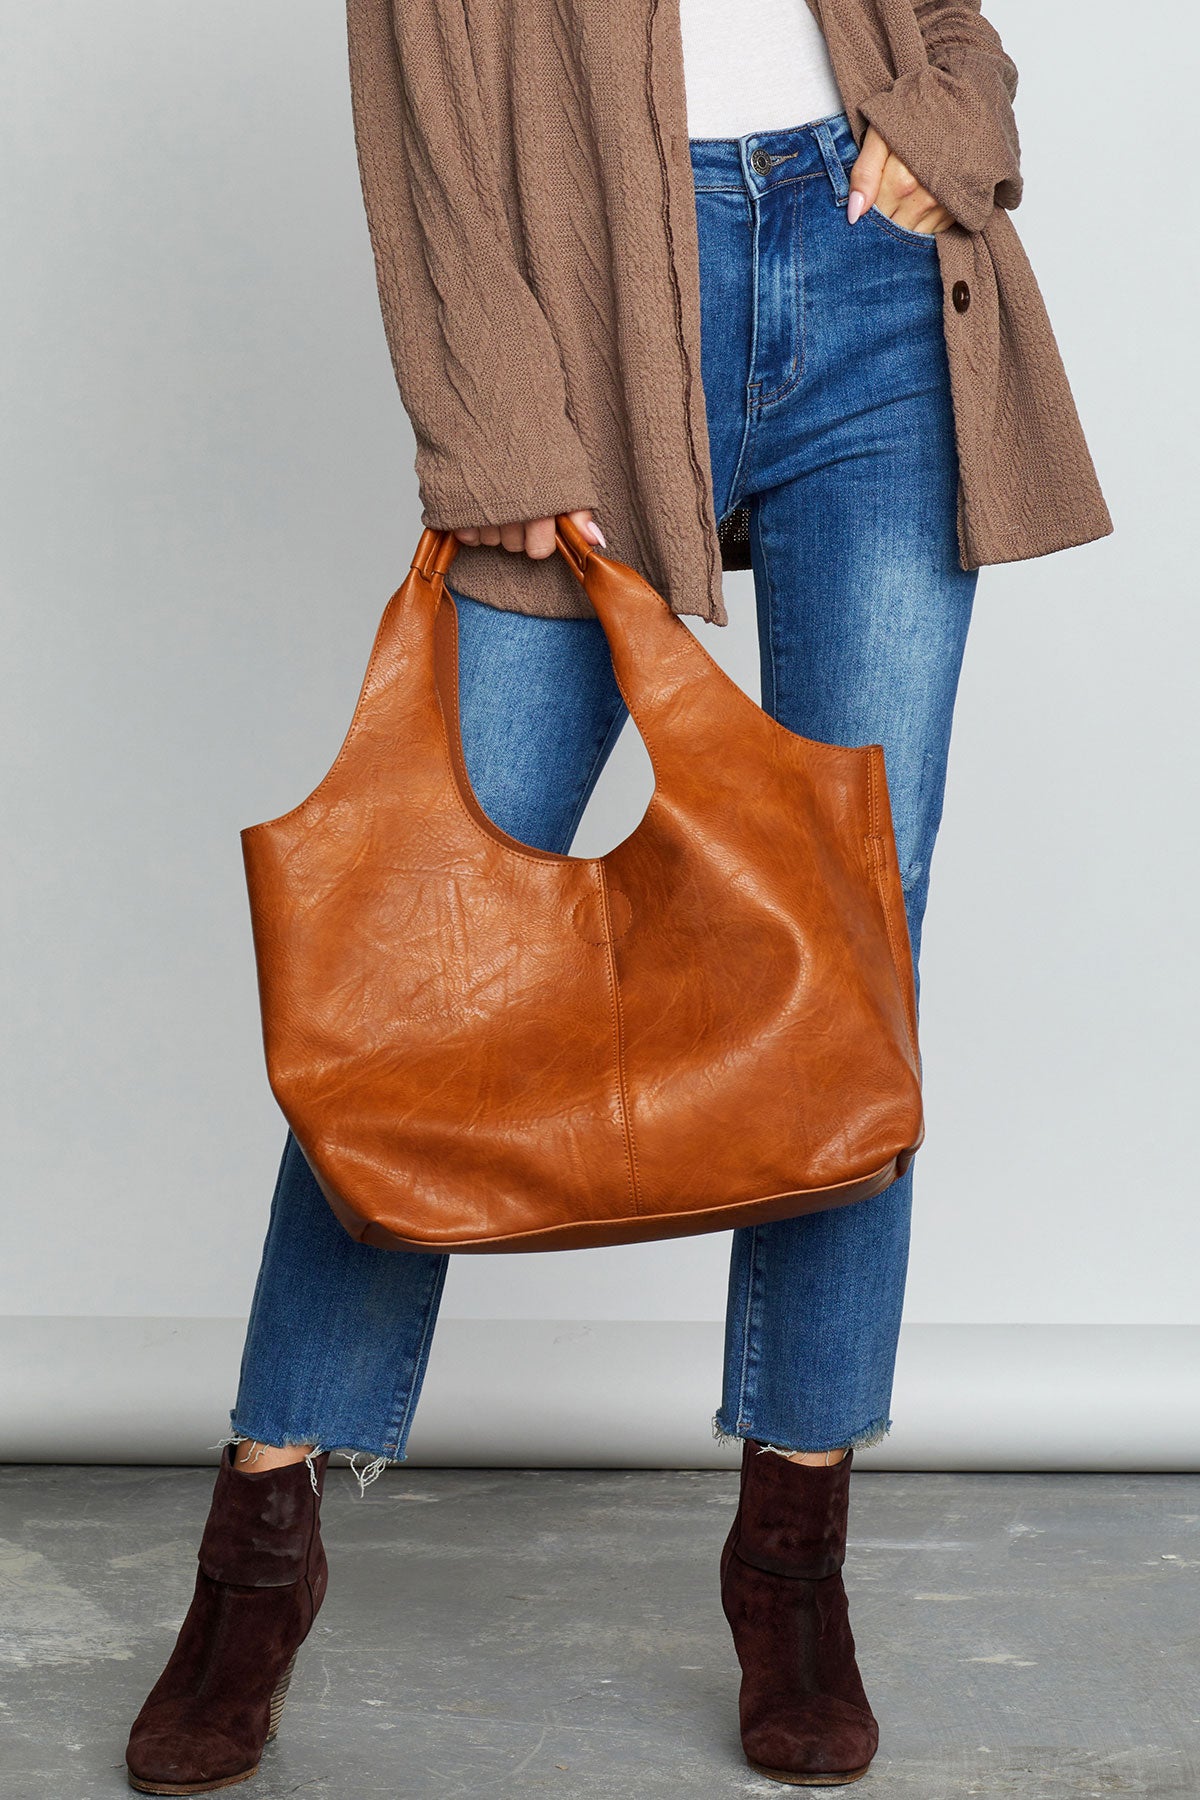 Inovera Handbags Adjustable Shoulder Hobo Bag designer bag, For Casual  Wear, Size: 35 L X 13 W X 28 H cm at Rs 720 in Surat